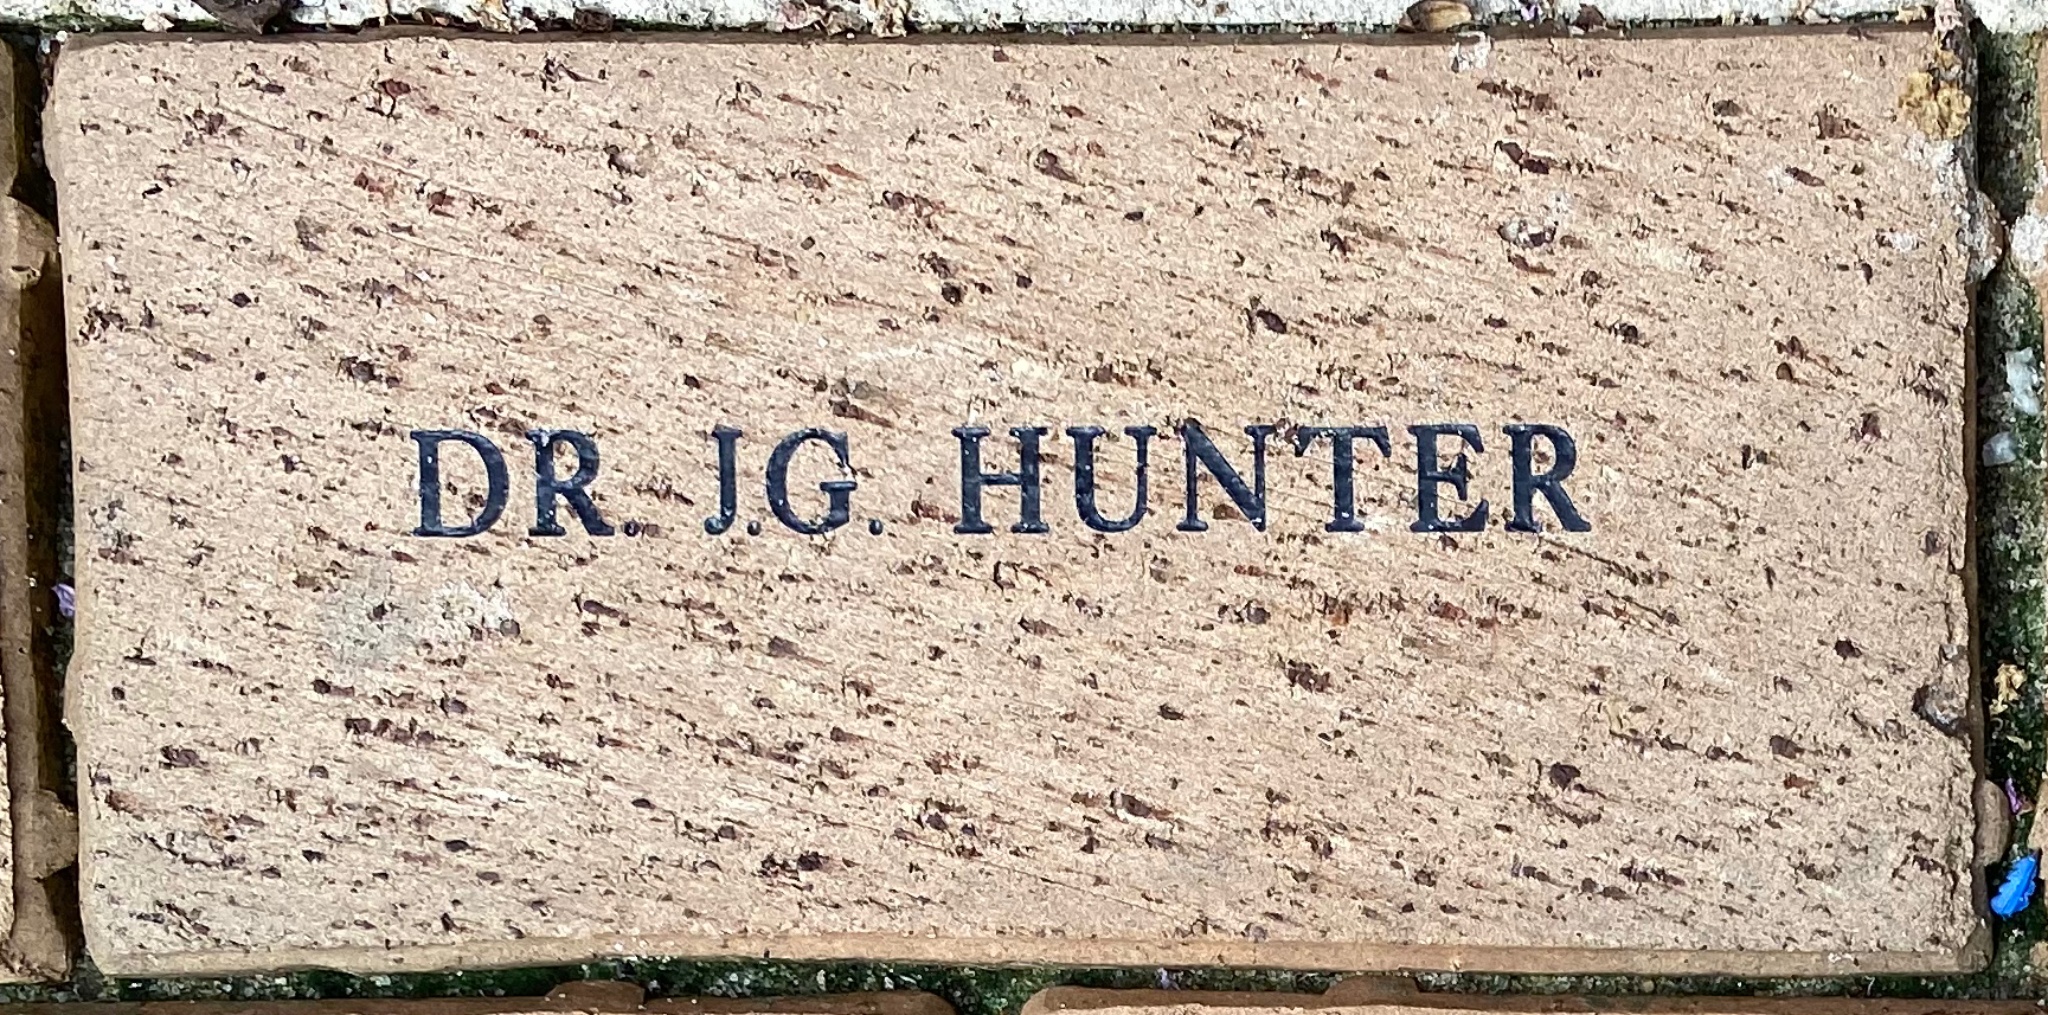 DR. J.G. HUNTER